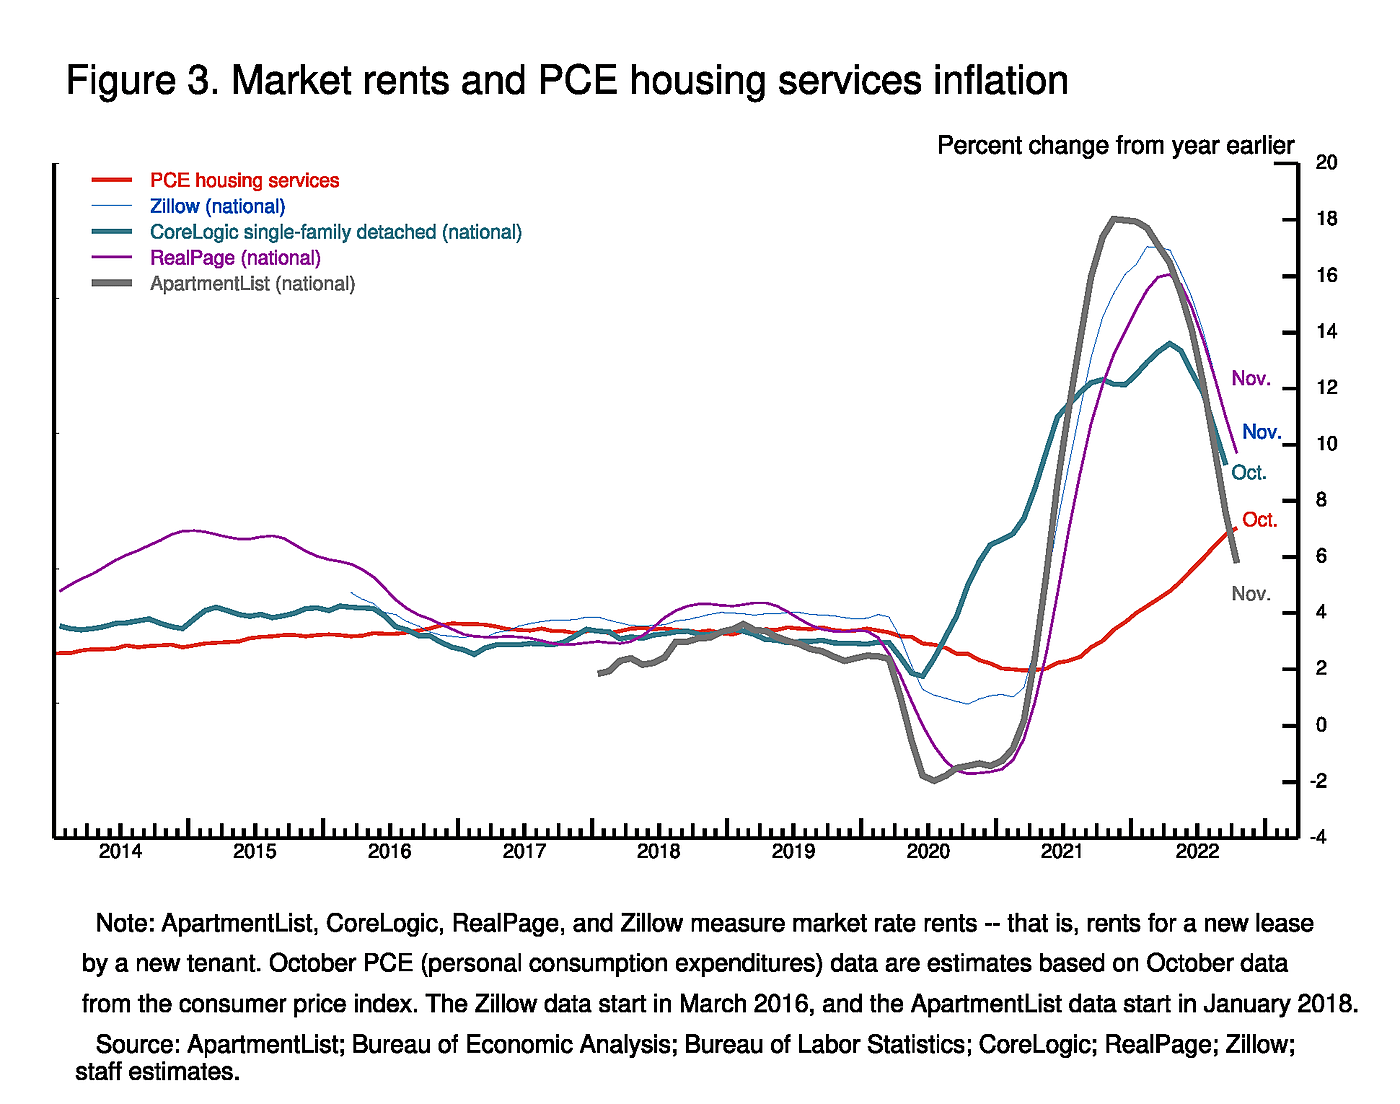 Estimates of Market Rents versus late PCE Housing Inflation